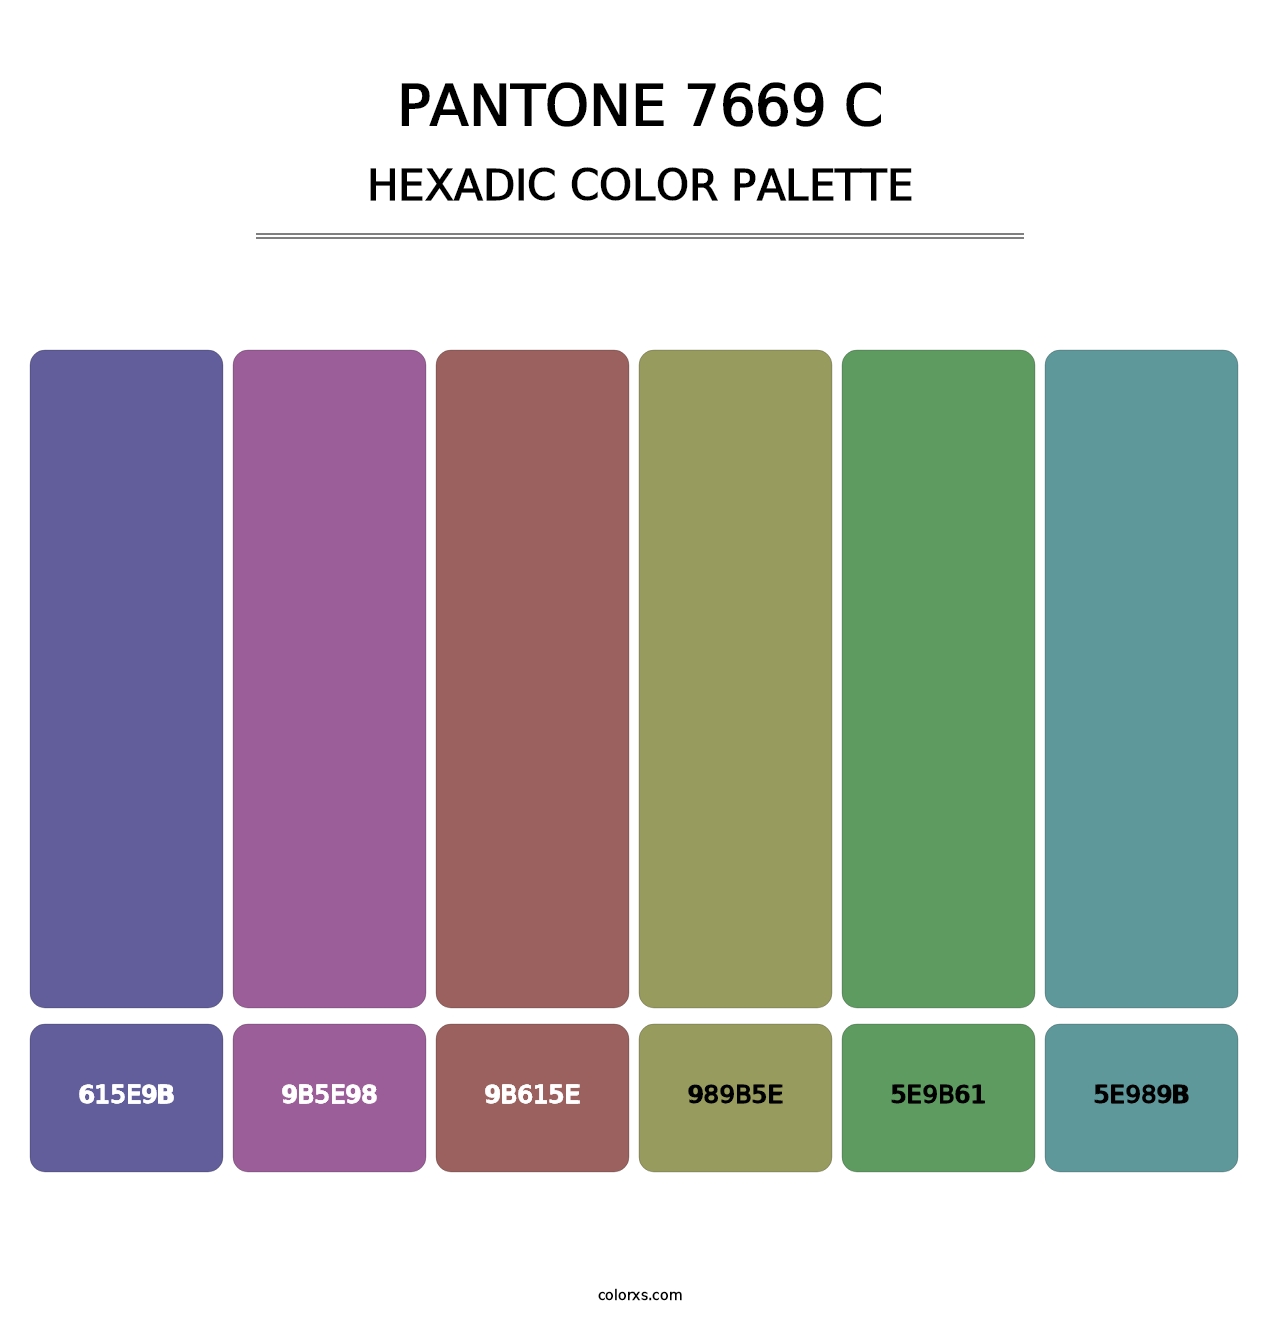 PANTONE 7669 C - Hexadic Color Palette